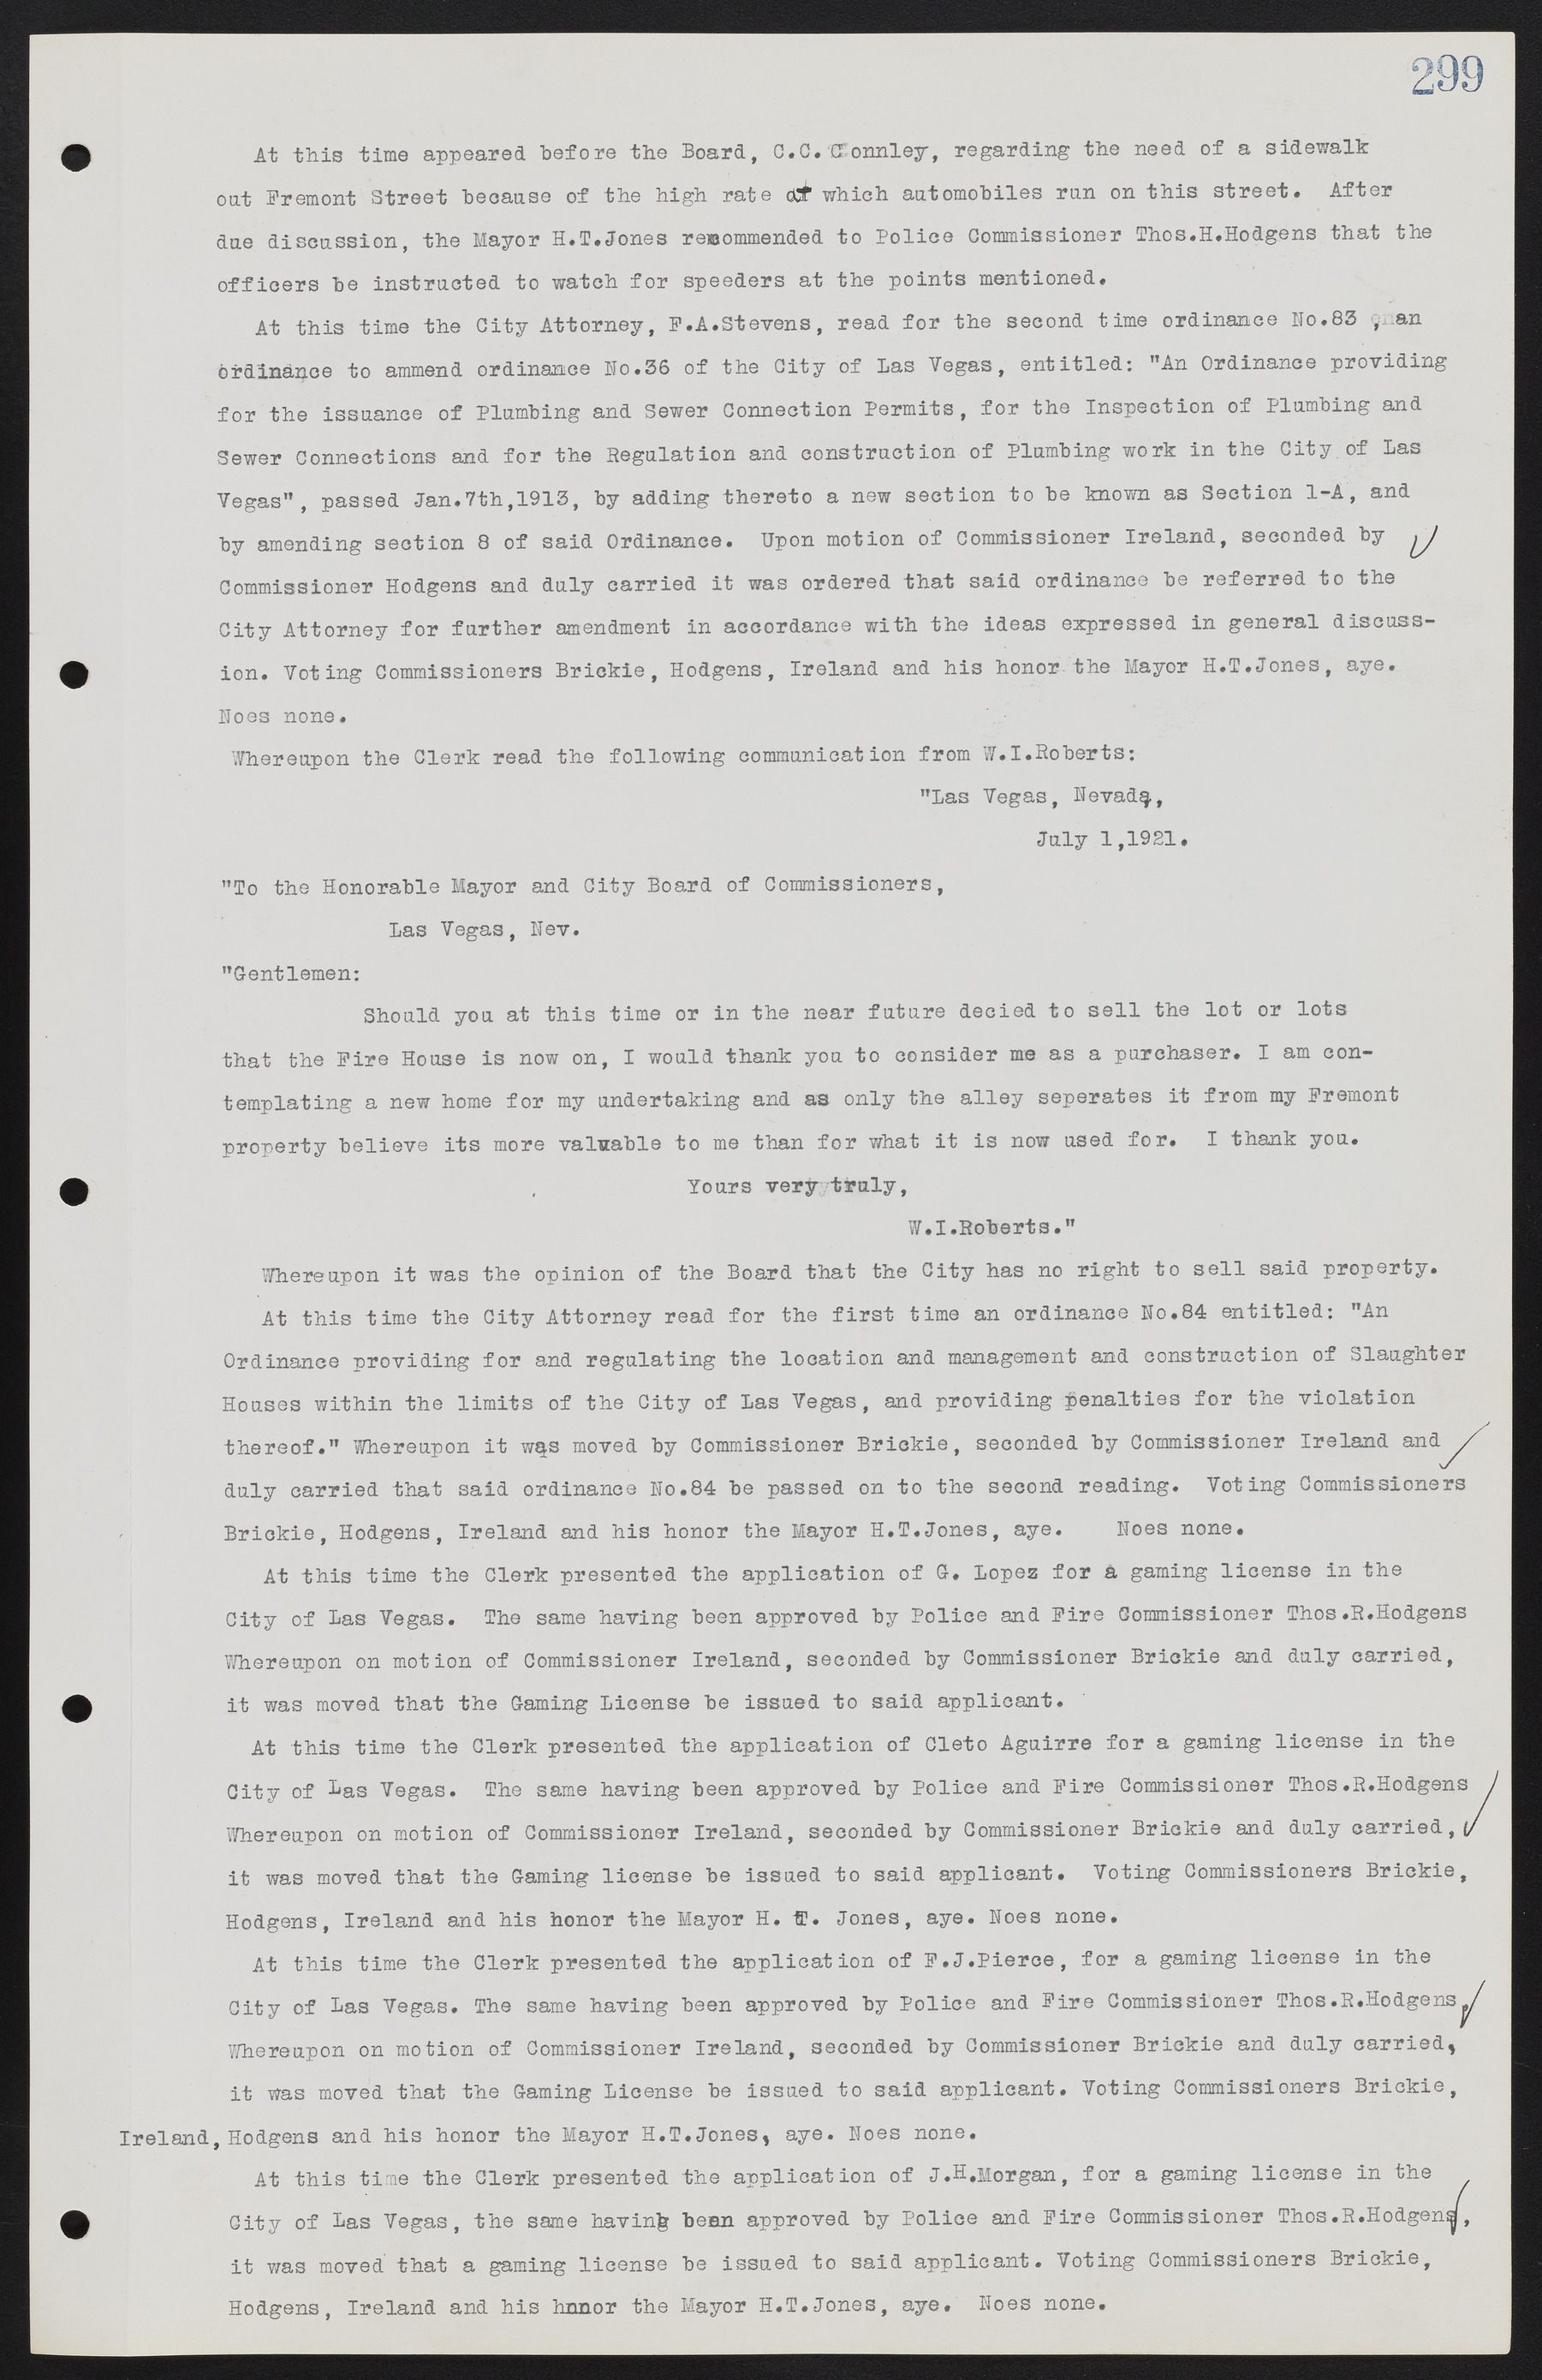 Las Vegas City Commission Minutes, June 22, 1911 to February 7, 1922, lvc000001-315